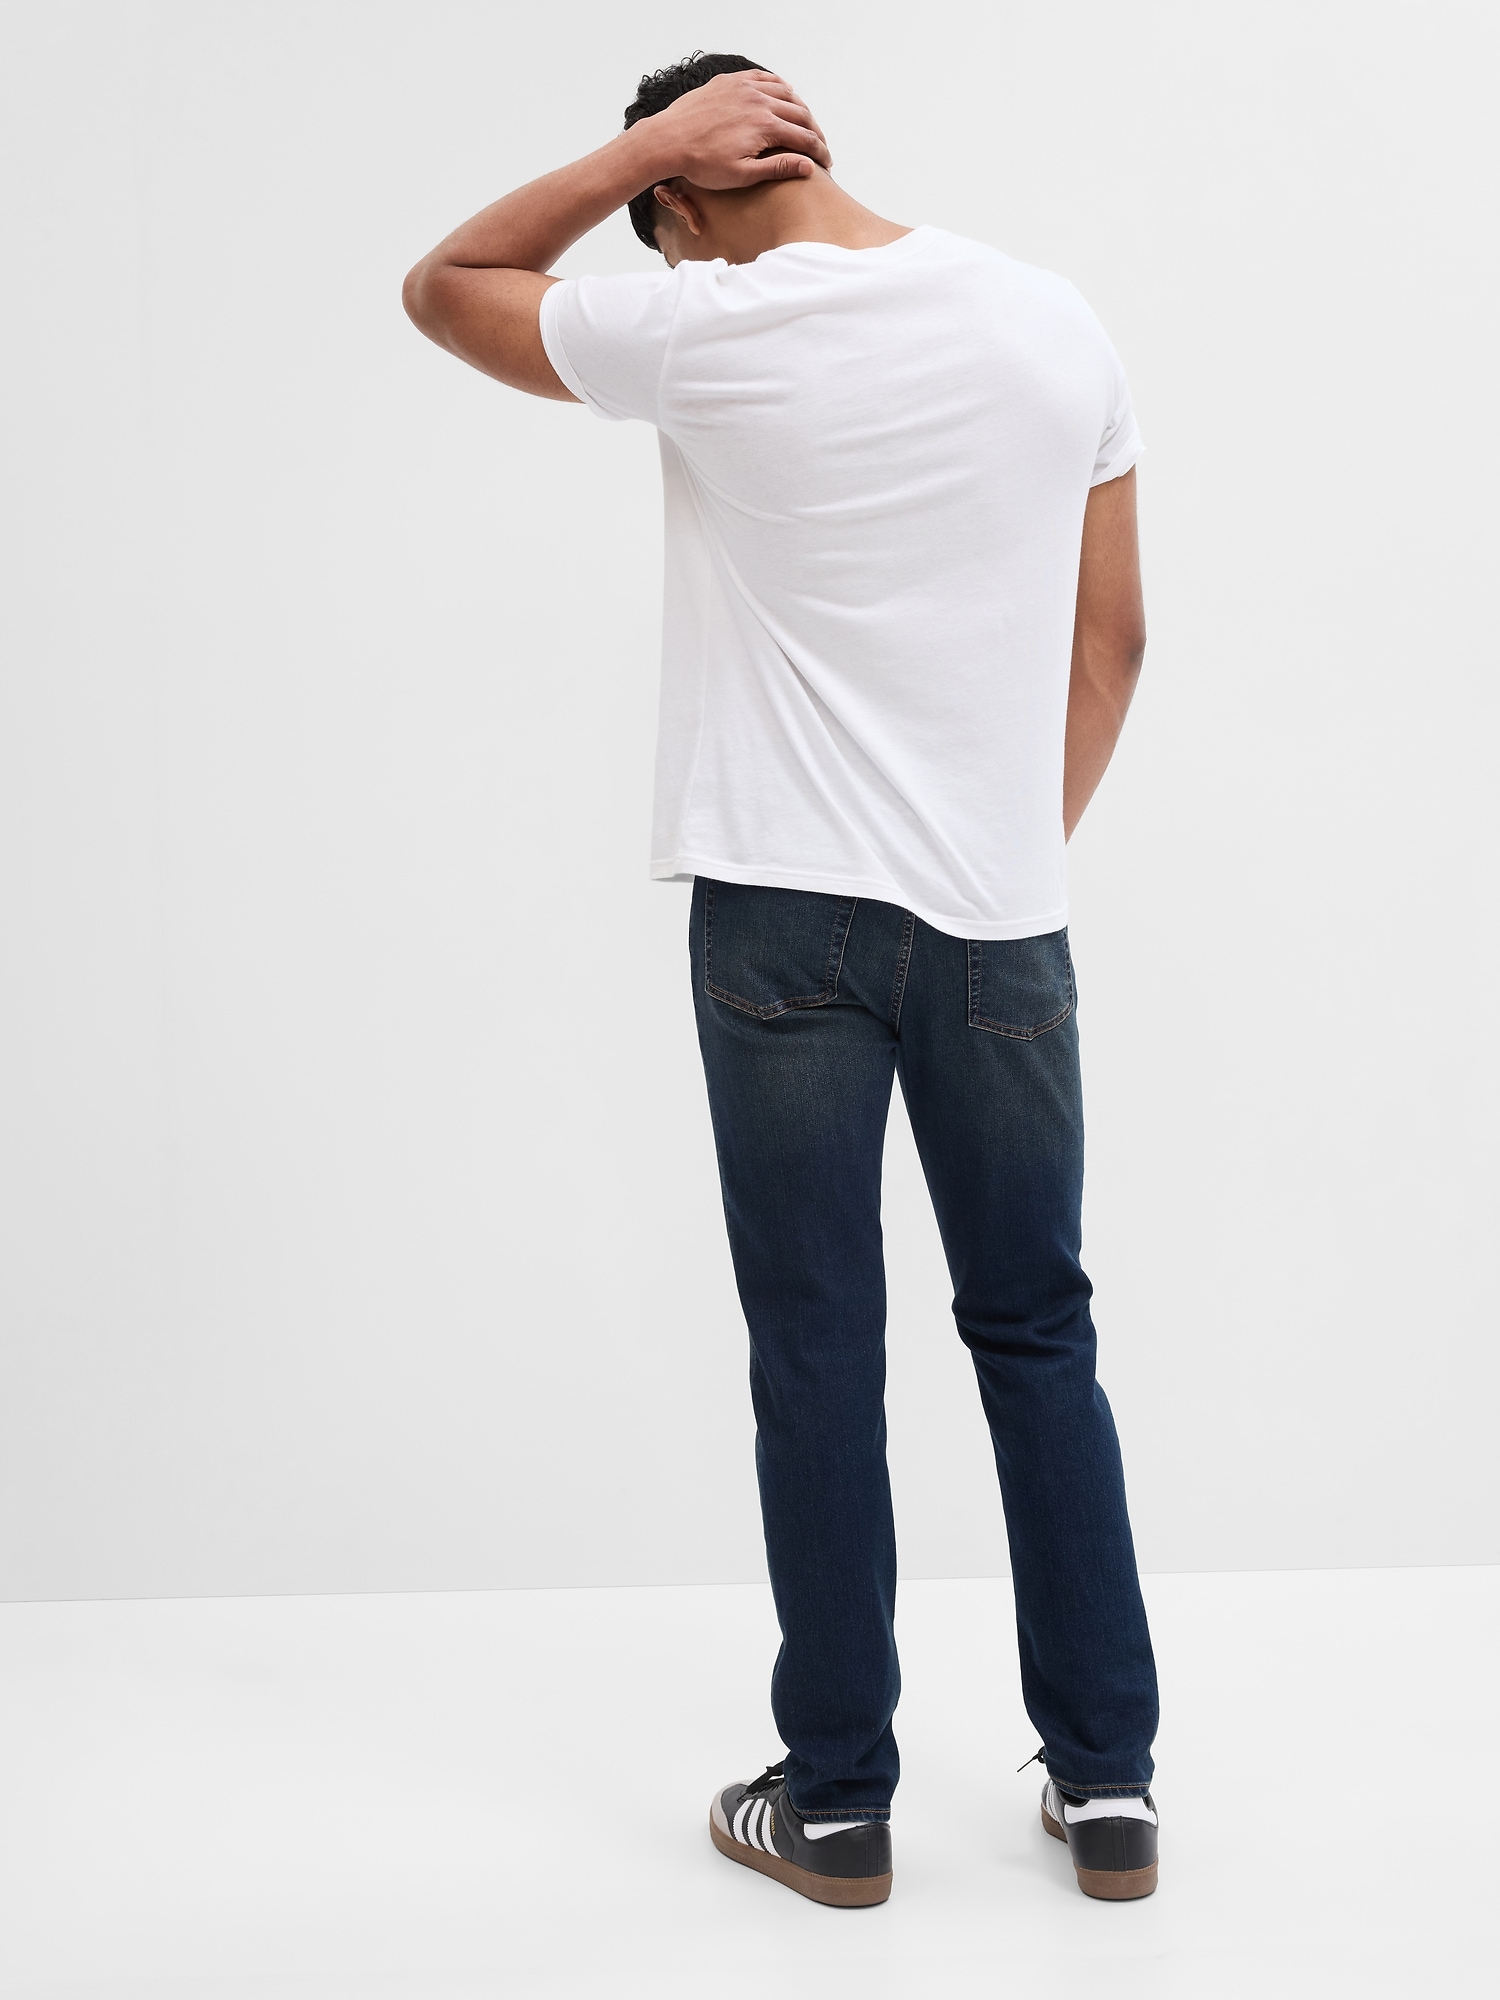 Gap Factory Slim GapFlex Soft Wear Jeans with Washwell - ShopStyle